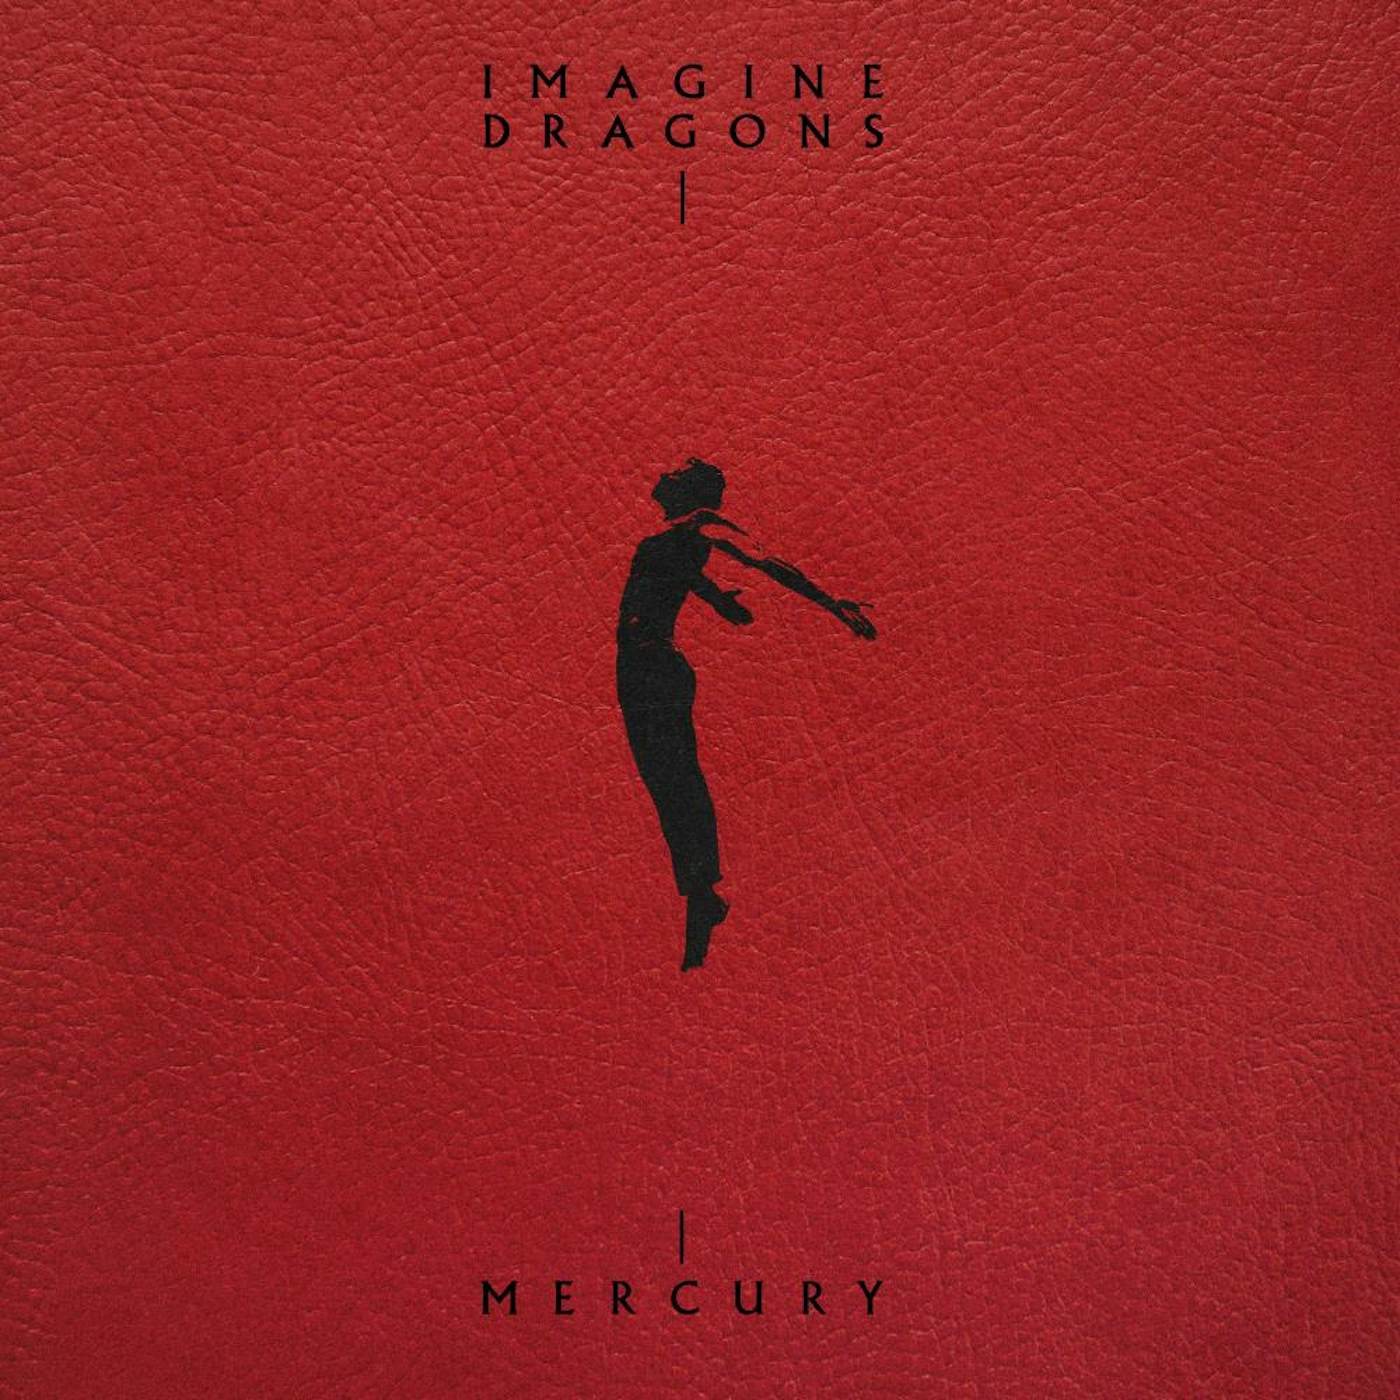 Imagine Dragons MERCURY – ACTS 1 & 2 (DELUXE/2CD) CD